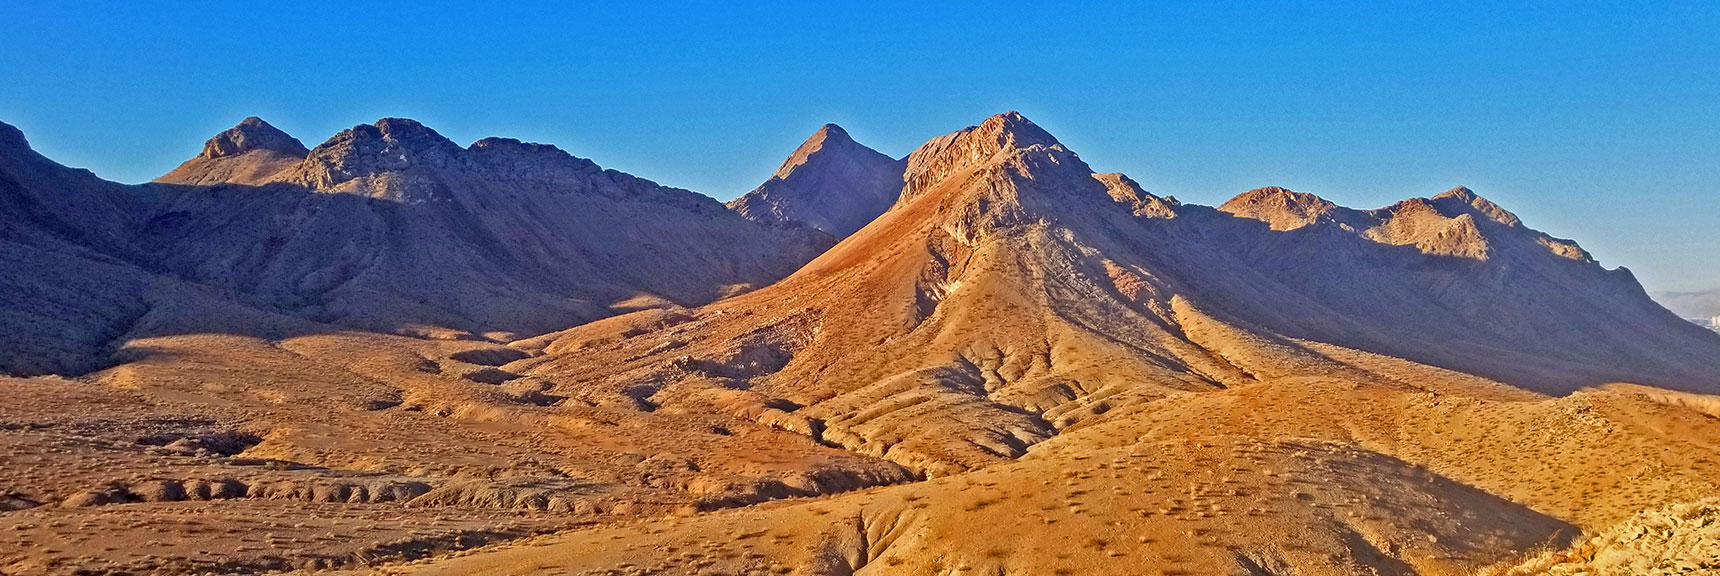 Looking Back on Frenchman Mt. and Route Toward Sunrise Mt. | Sunrise Mountain, Las Vegas, Nevada